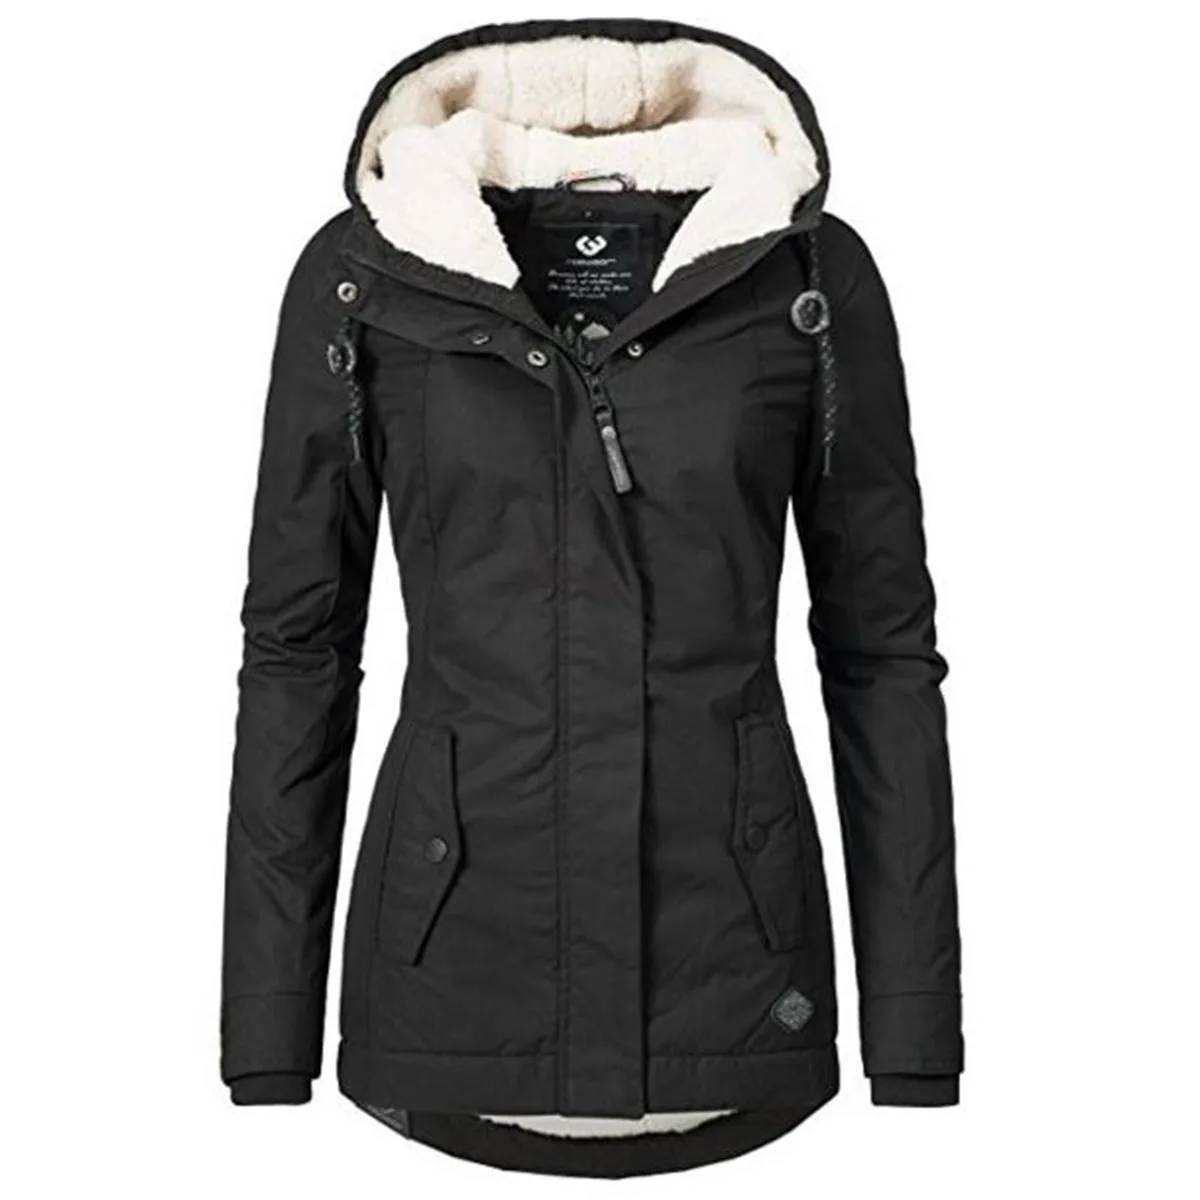 Black Cotton Coats Women Casual Hooded Jacket Coat Fashion Simple High Street Slim 2018 Winter